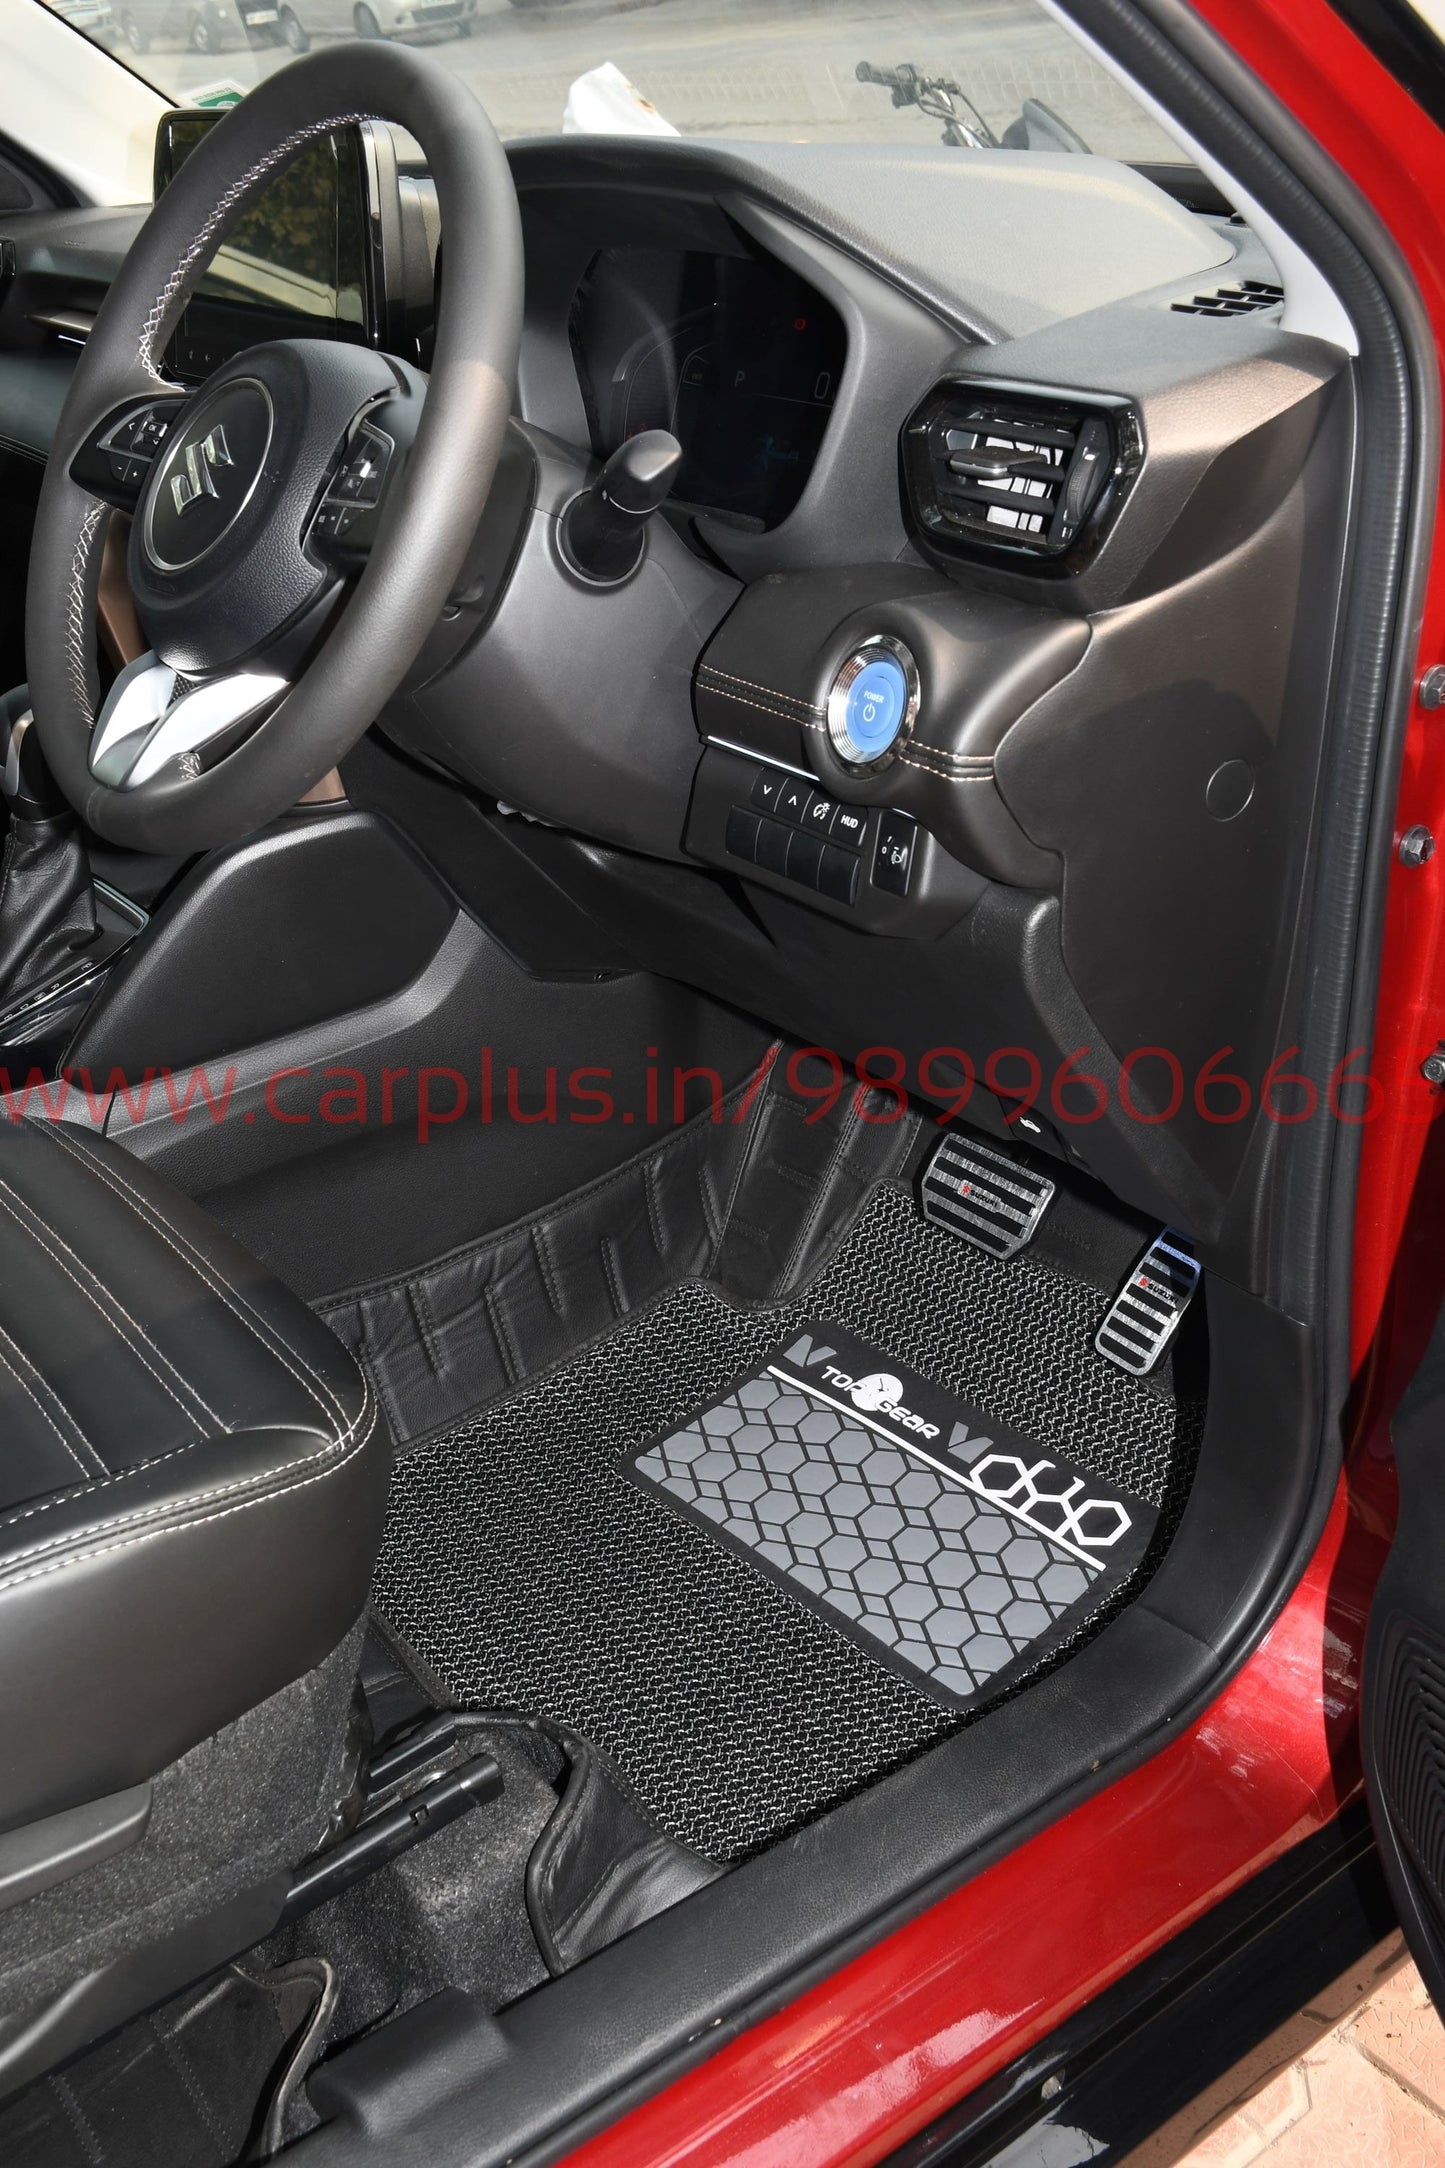 
                  
                    Top Gear 4D BOSS HC Leatherite Car Mats for Grand Vitara-Black(HC-Silver/Black)-7D MATS-TOP GEAR-CARPLUS
                  
                